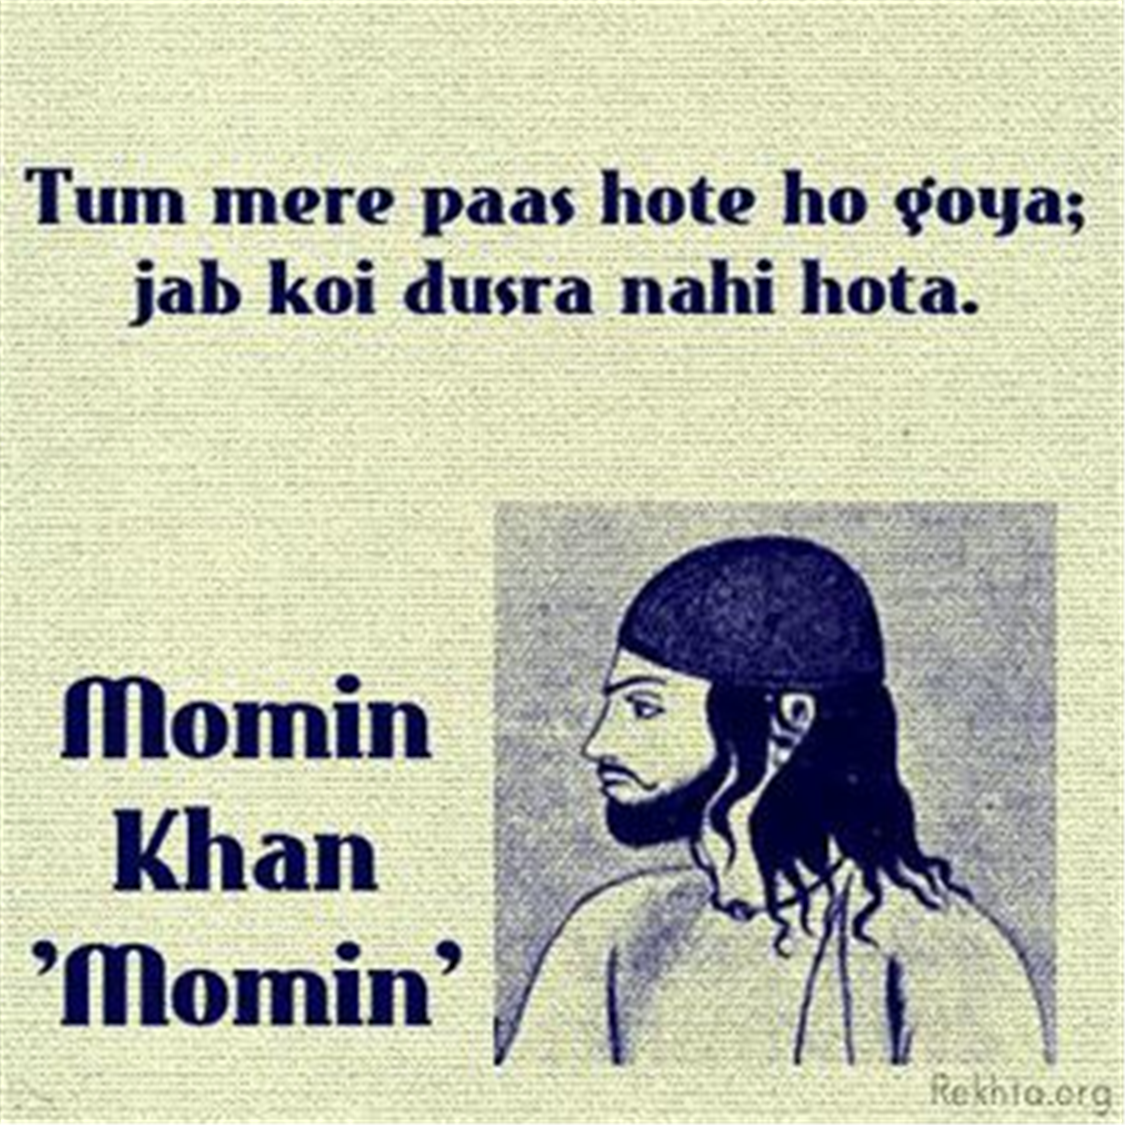 tum mire paas hote ho goyaa-Momin Khan Momin